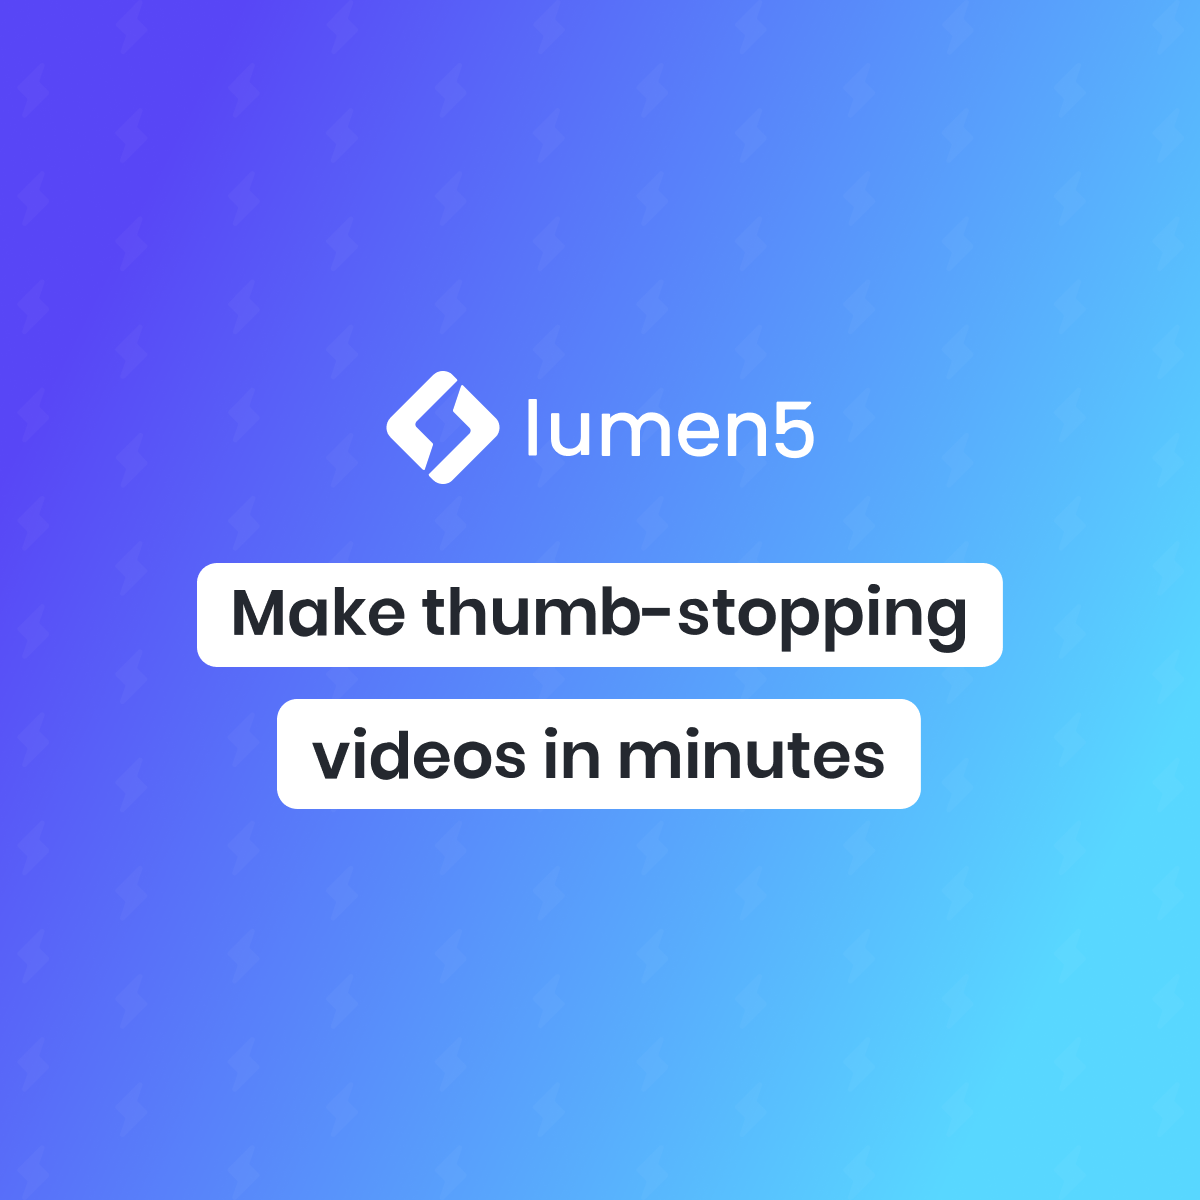 lumen5 - video maker | create videos online in minutes